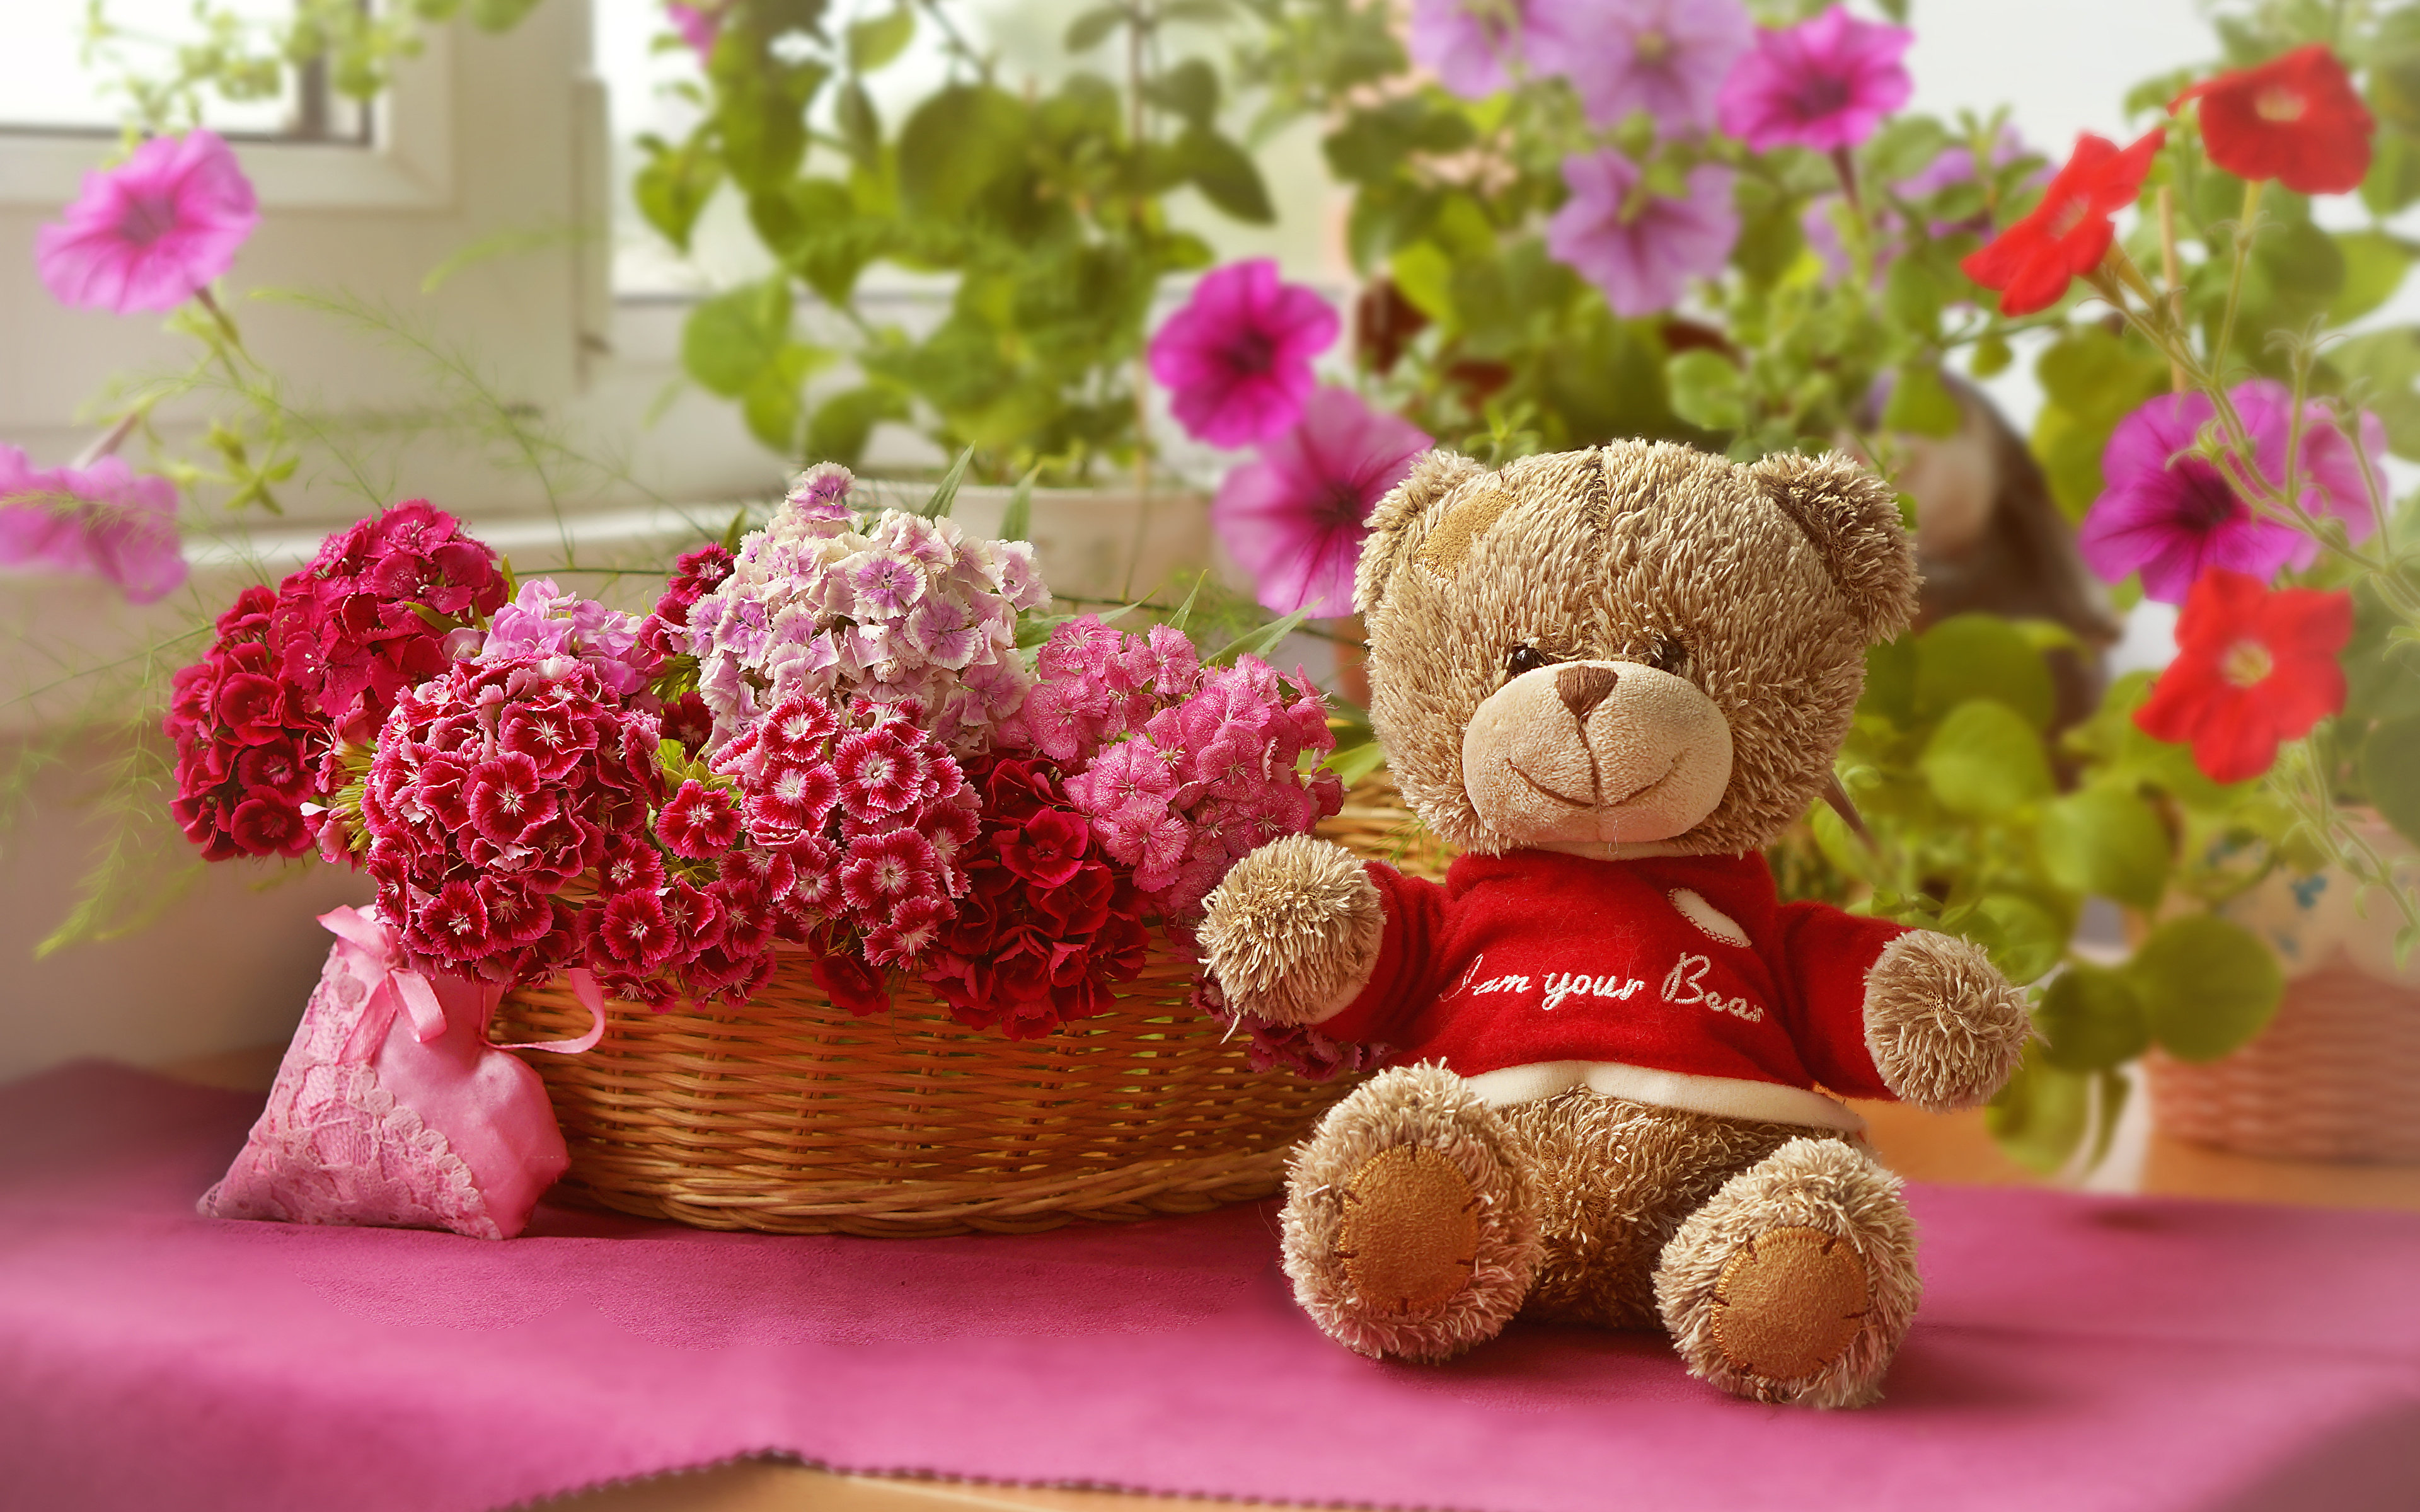 Медвежонок с цветами